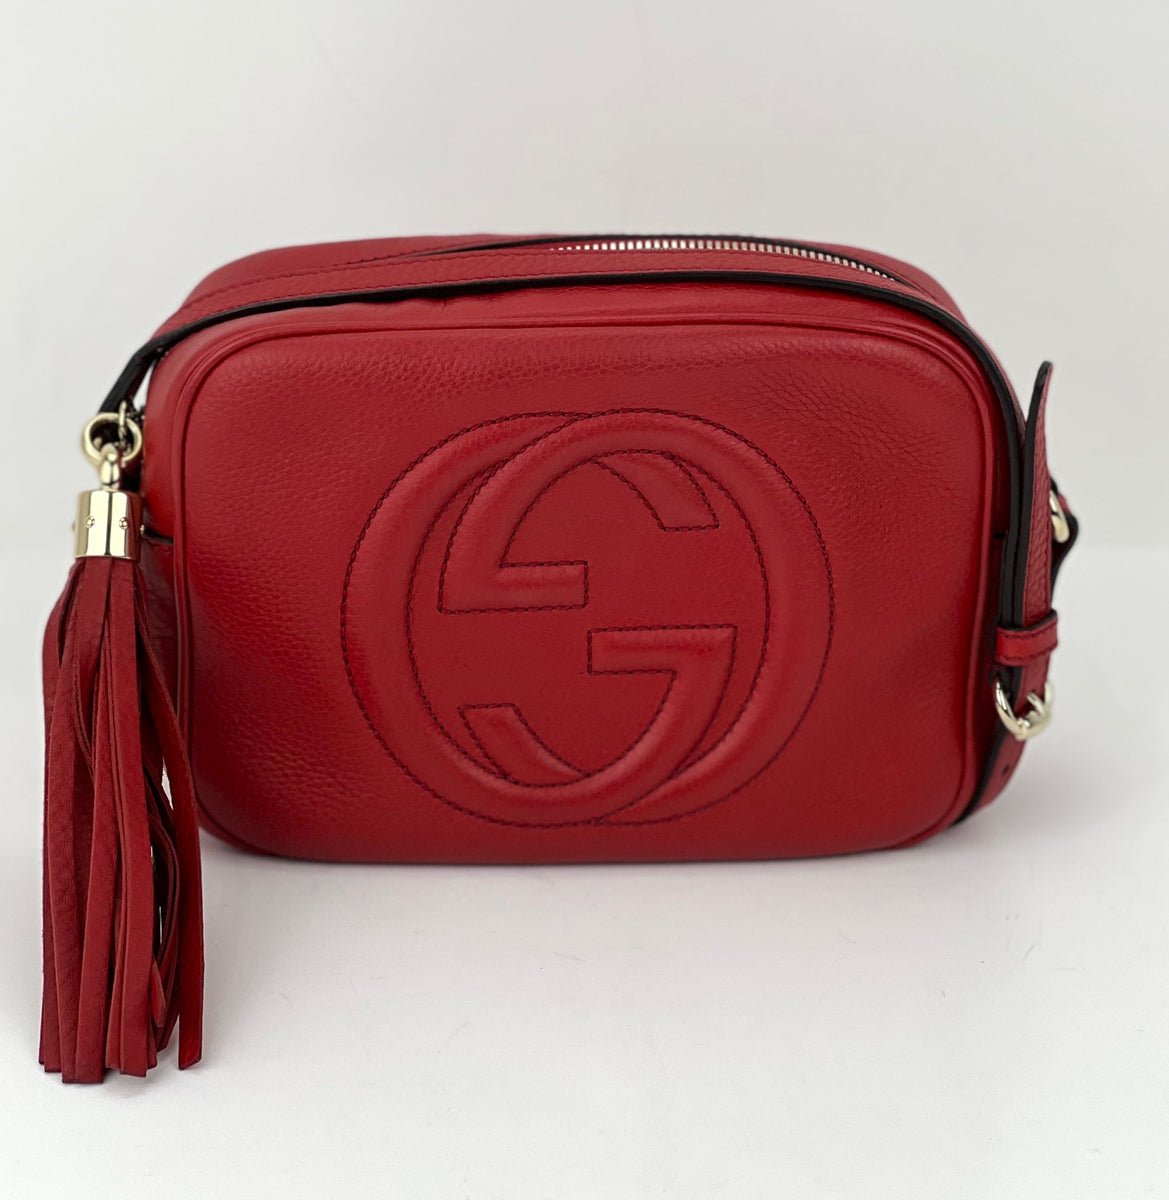 Lot 63 - Gucci Red Small Soho Disco Crossbody Bag